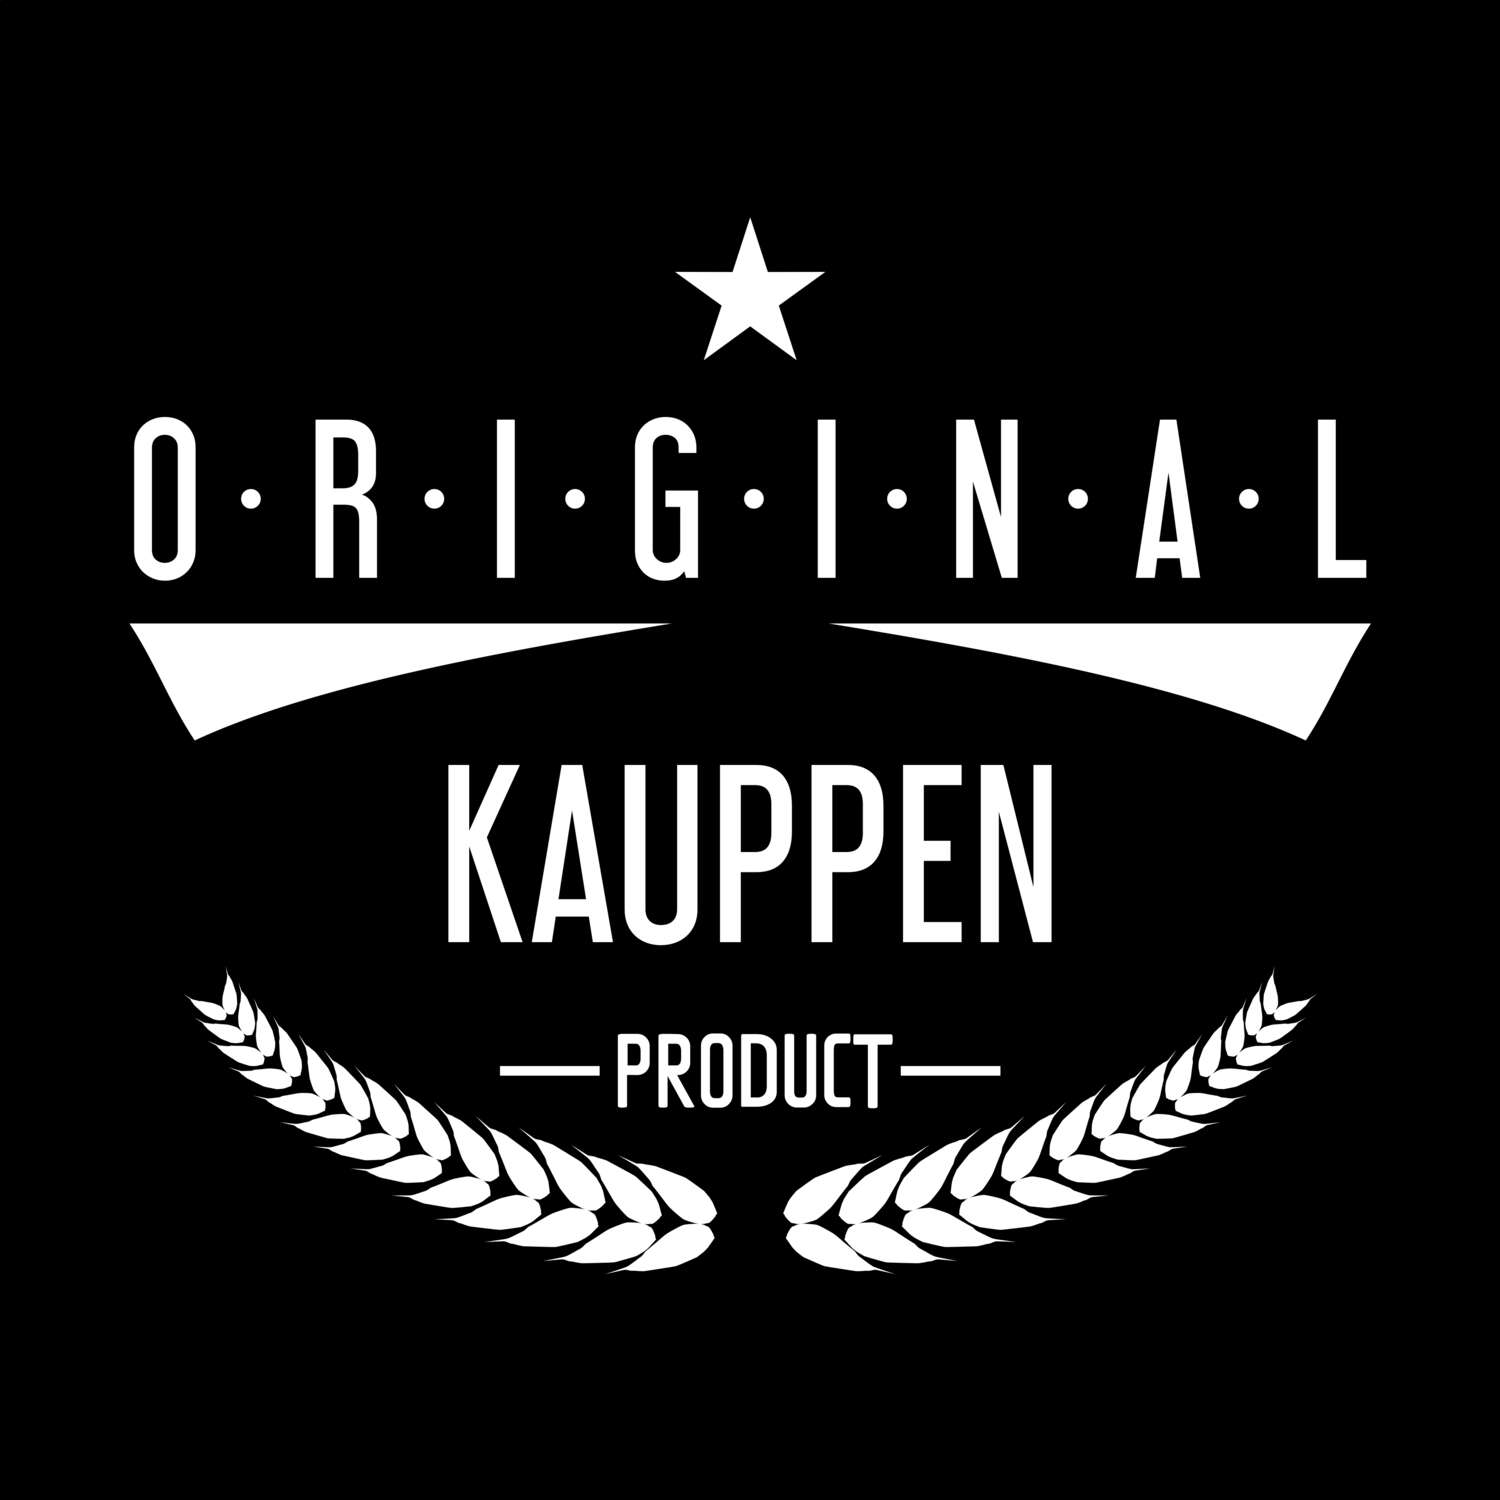 Kauppen T-Shirt »Original Product«